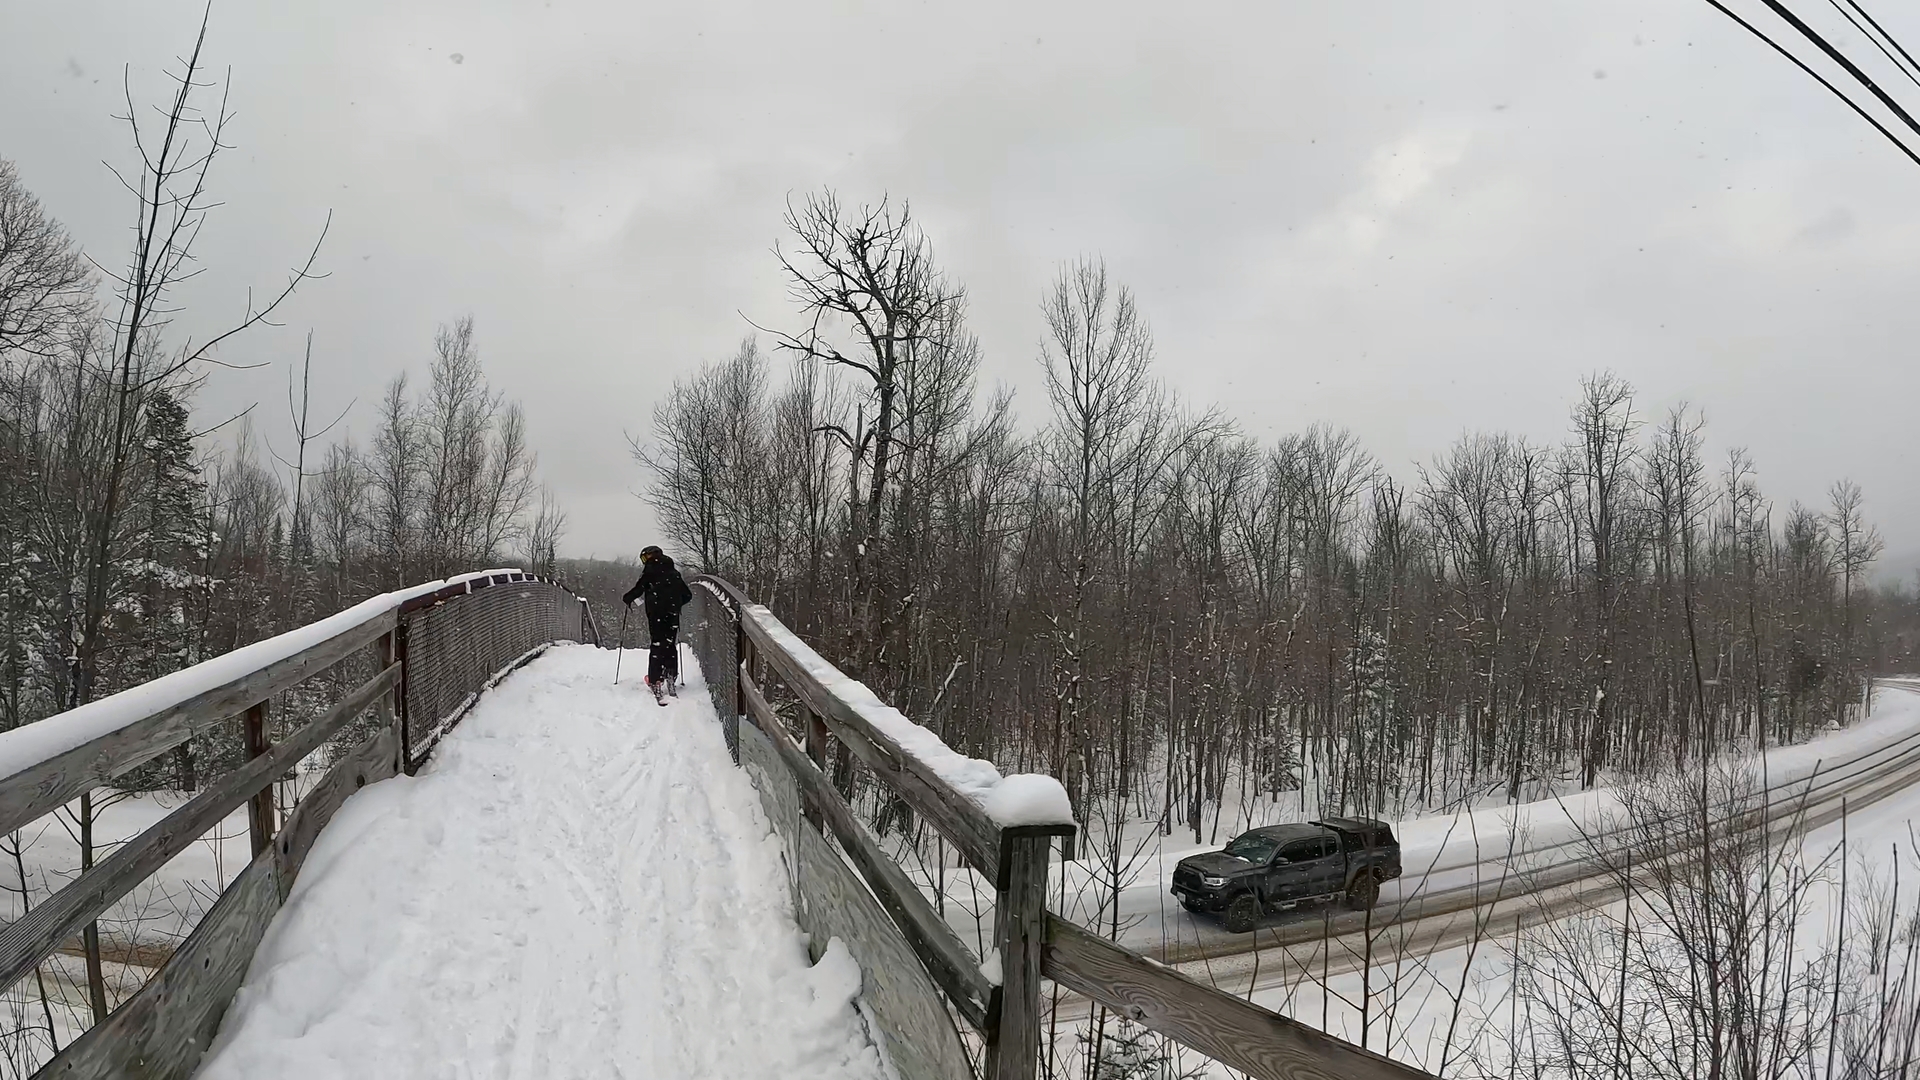 A ski bridge!